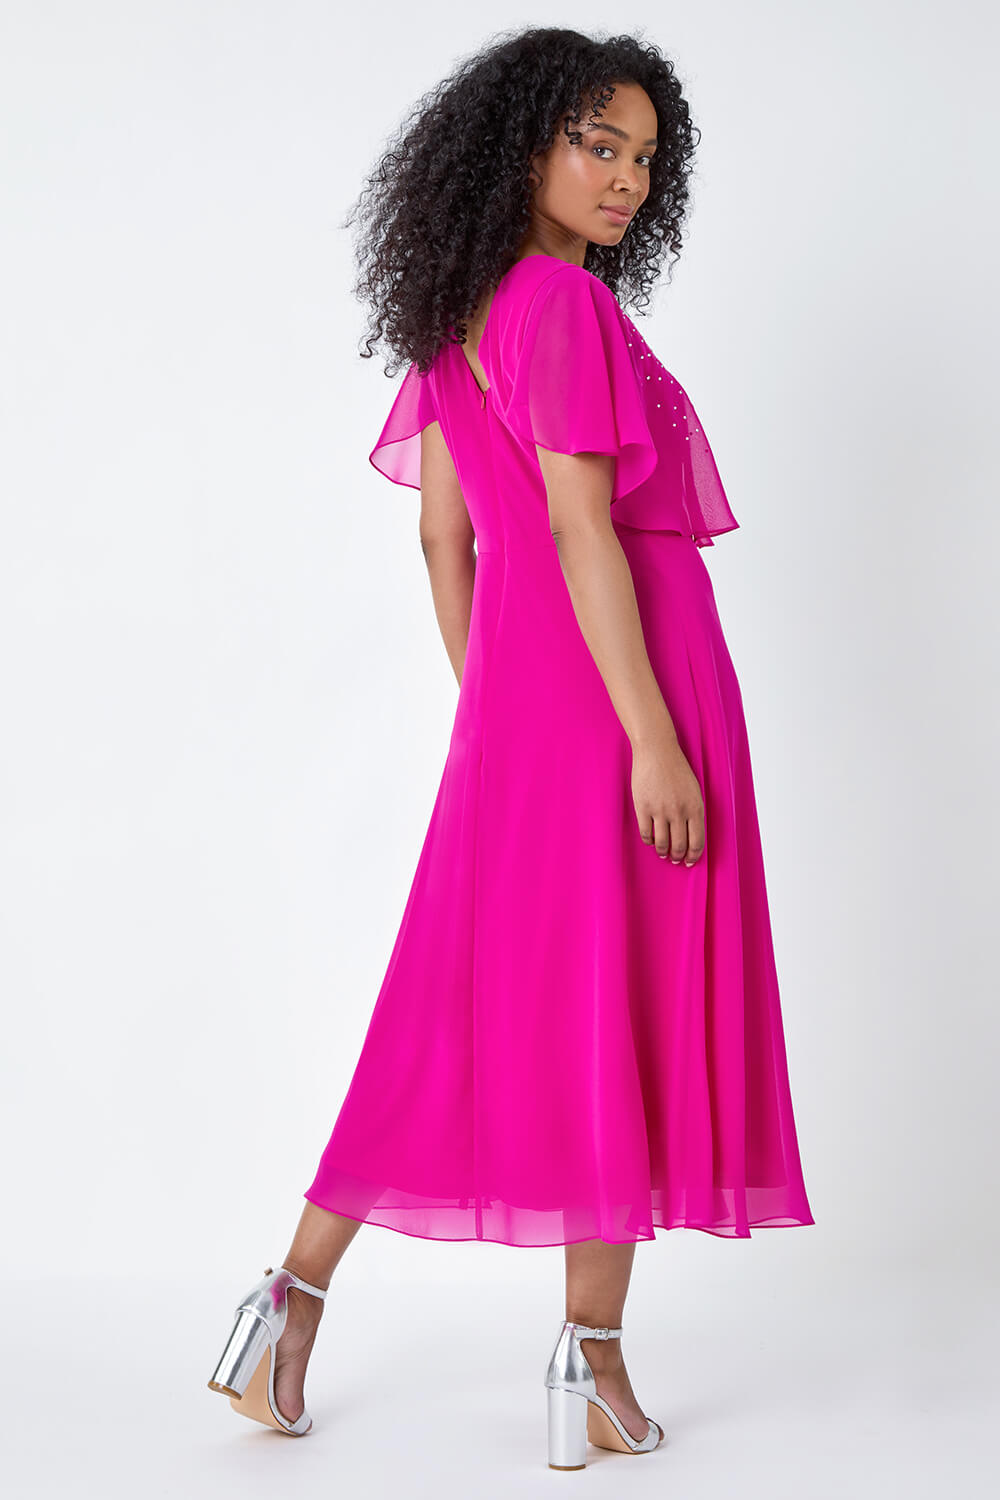 PINK Petite Embellished Midi Cape Dress, Image 3 of 5